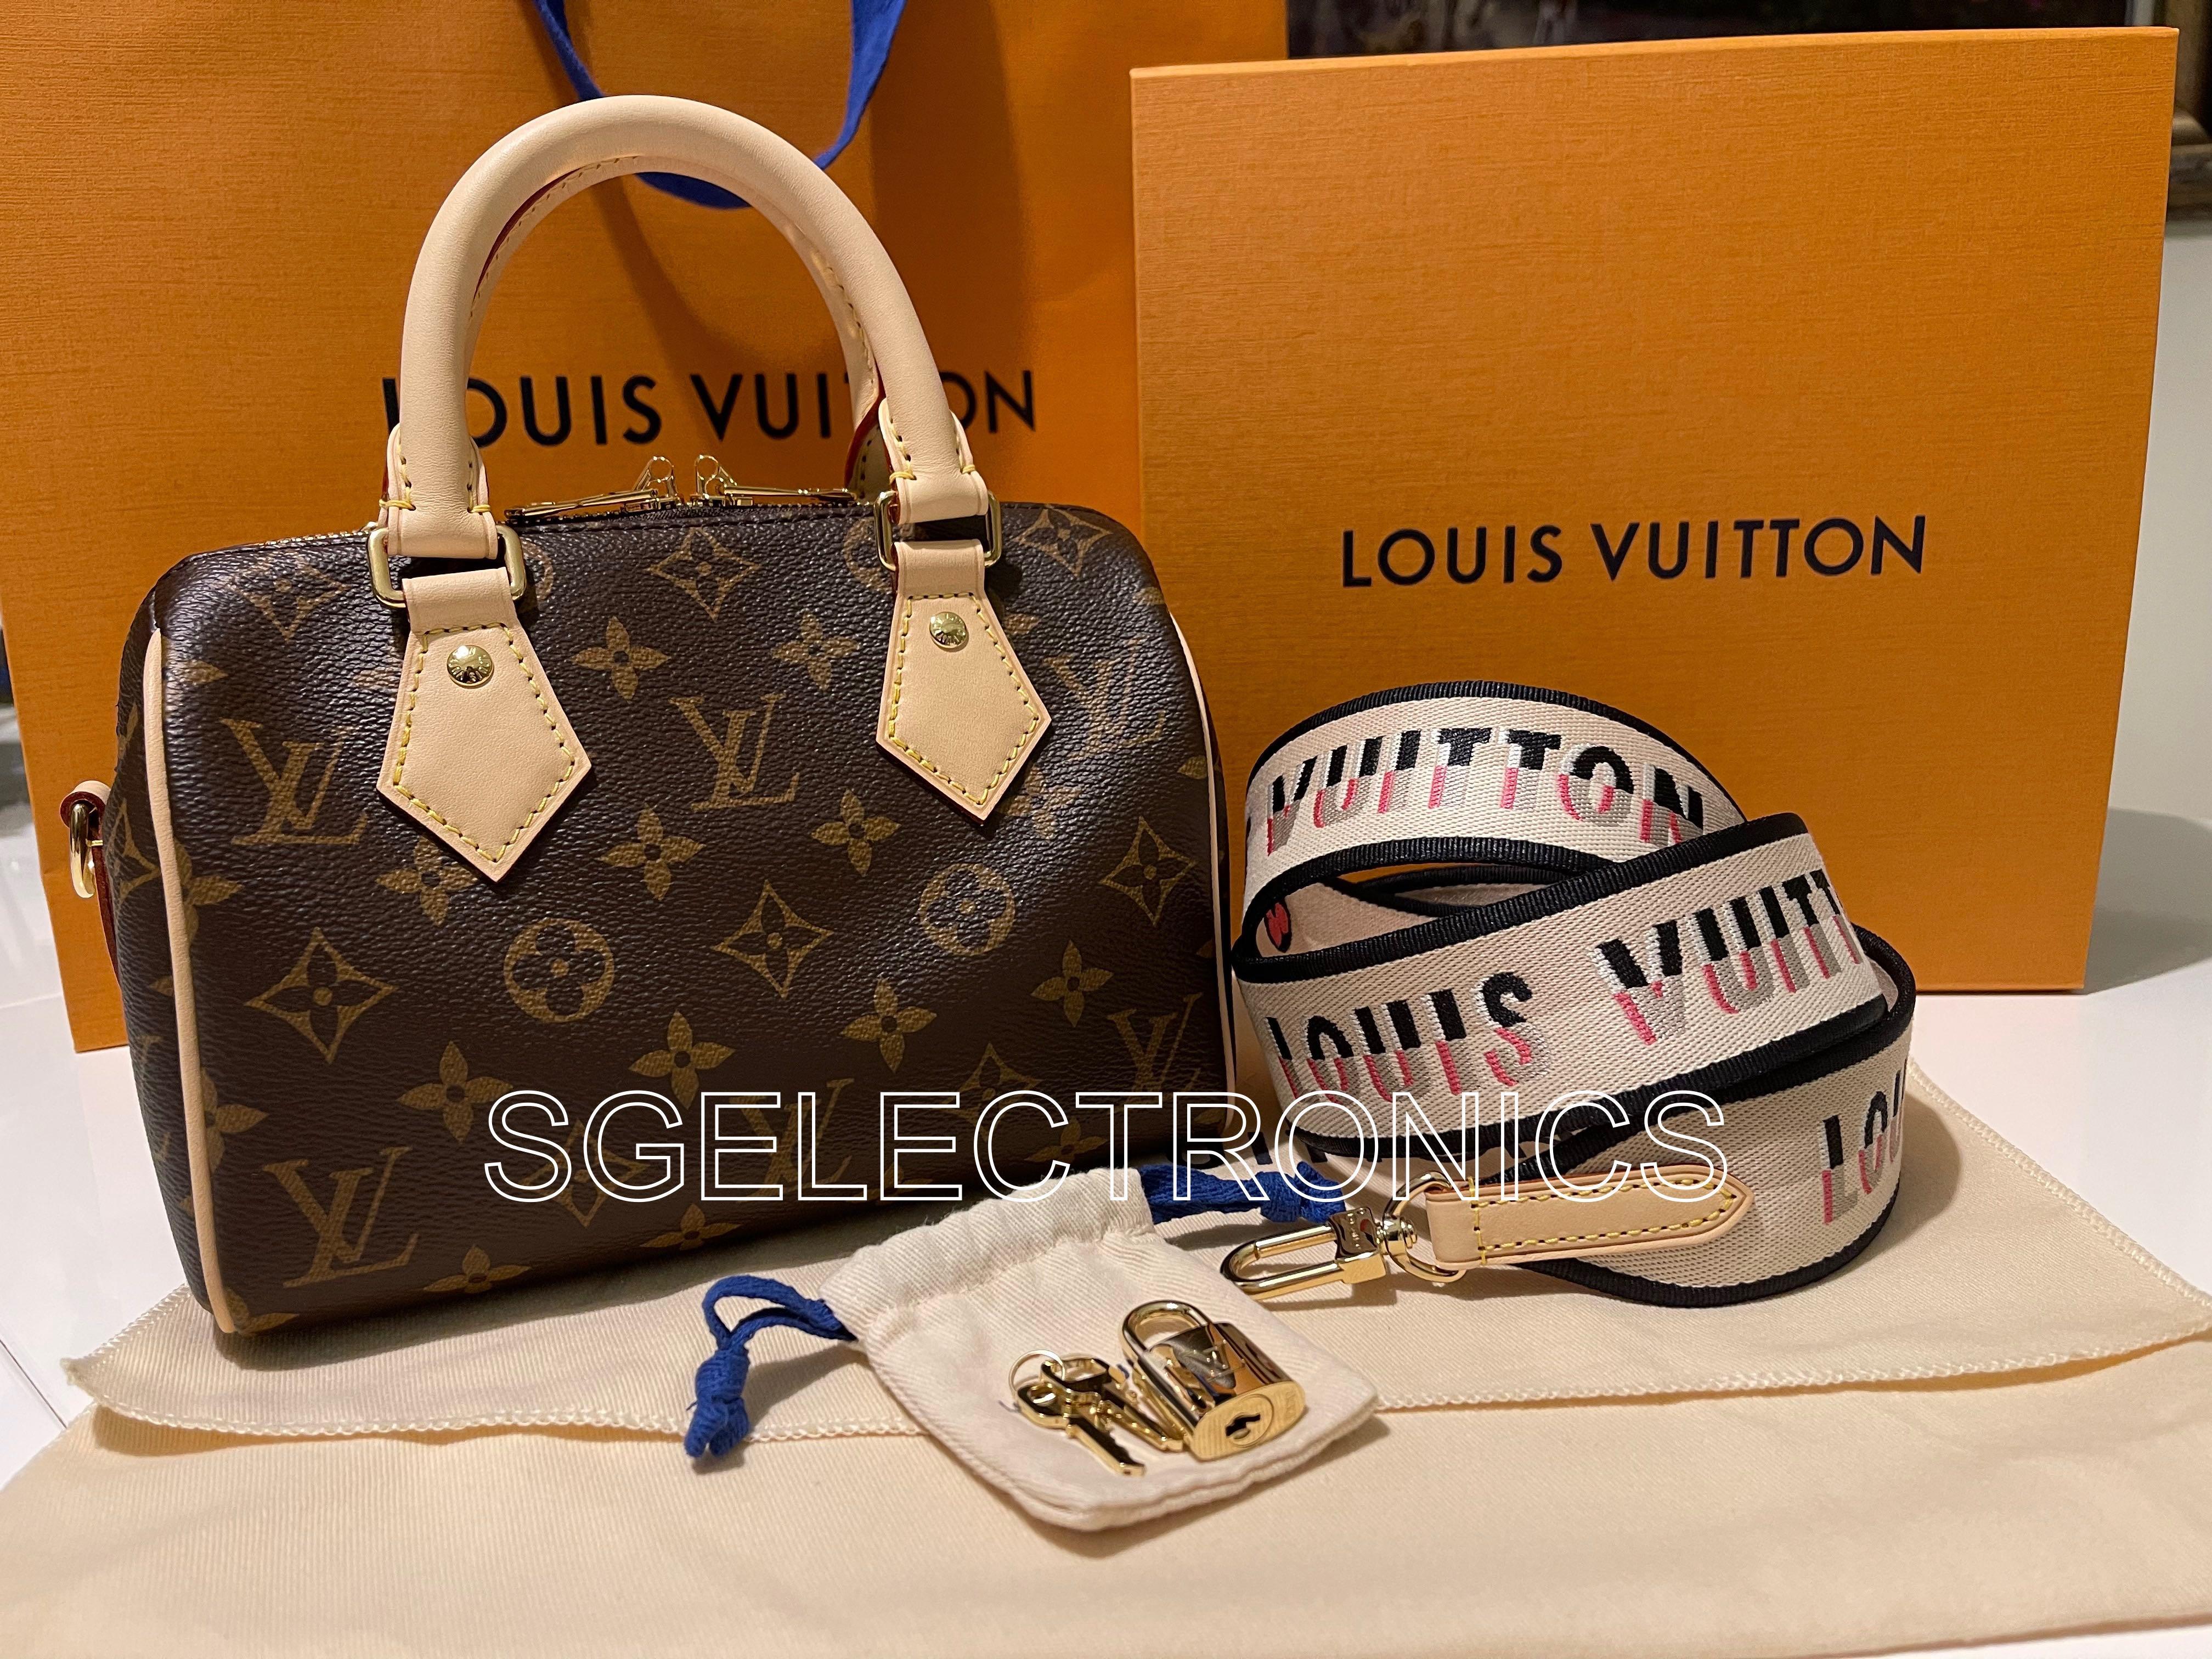 Louis Vuitton Speedy Speedy Bandouli√ Re 20, Black